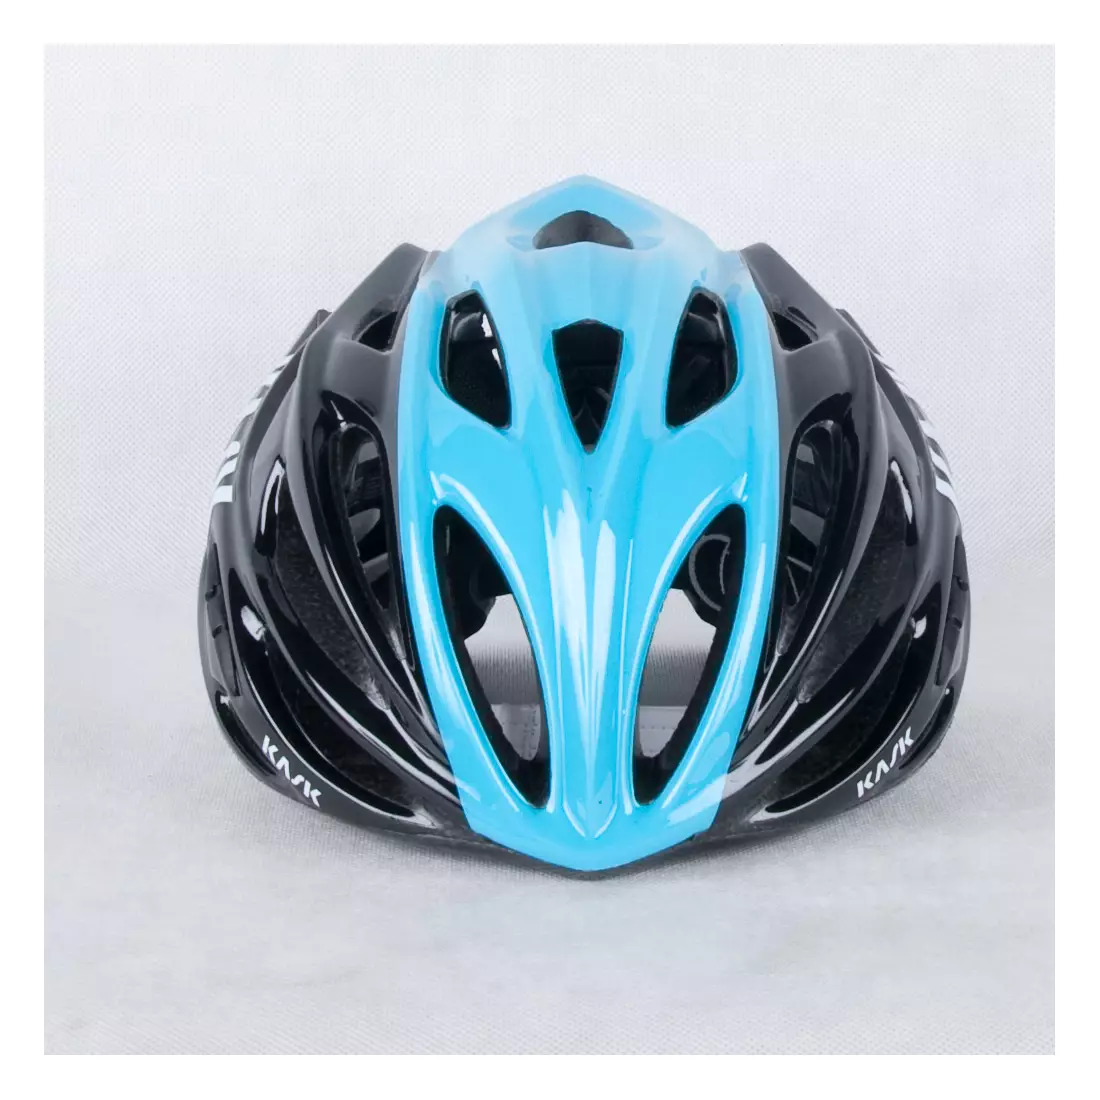 MOJITO HELMET - CHE00044.703 PT Sky bicycle helmet